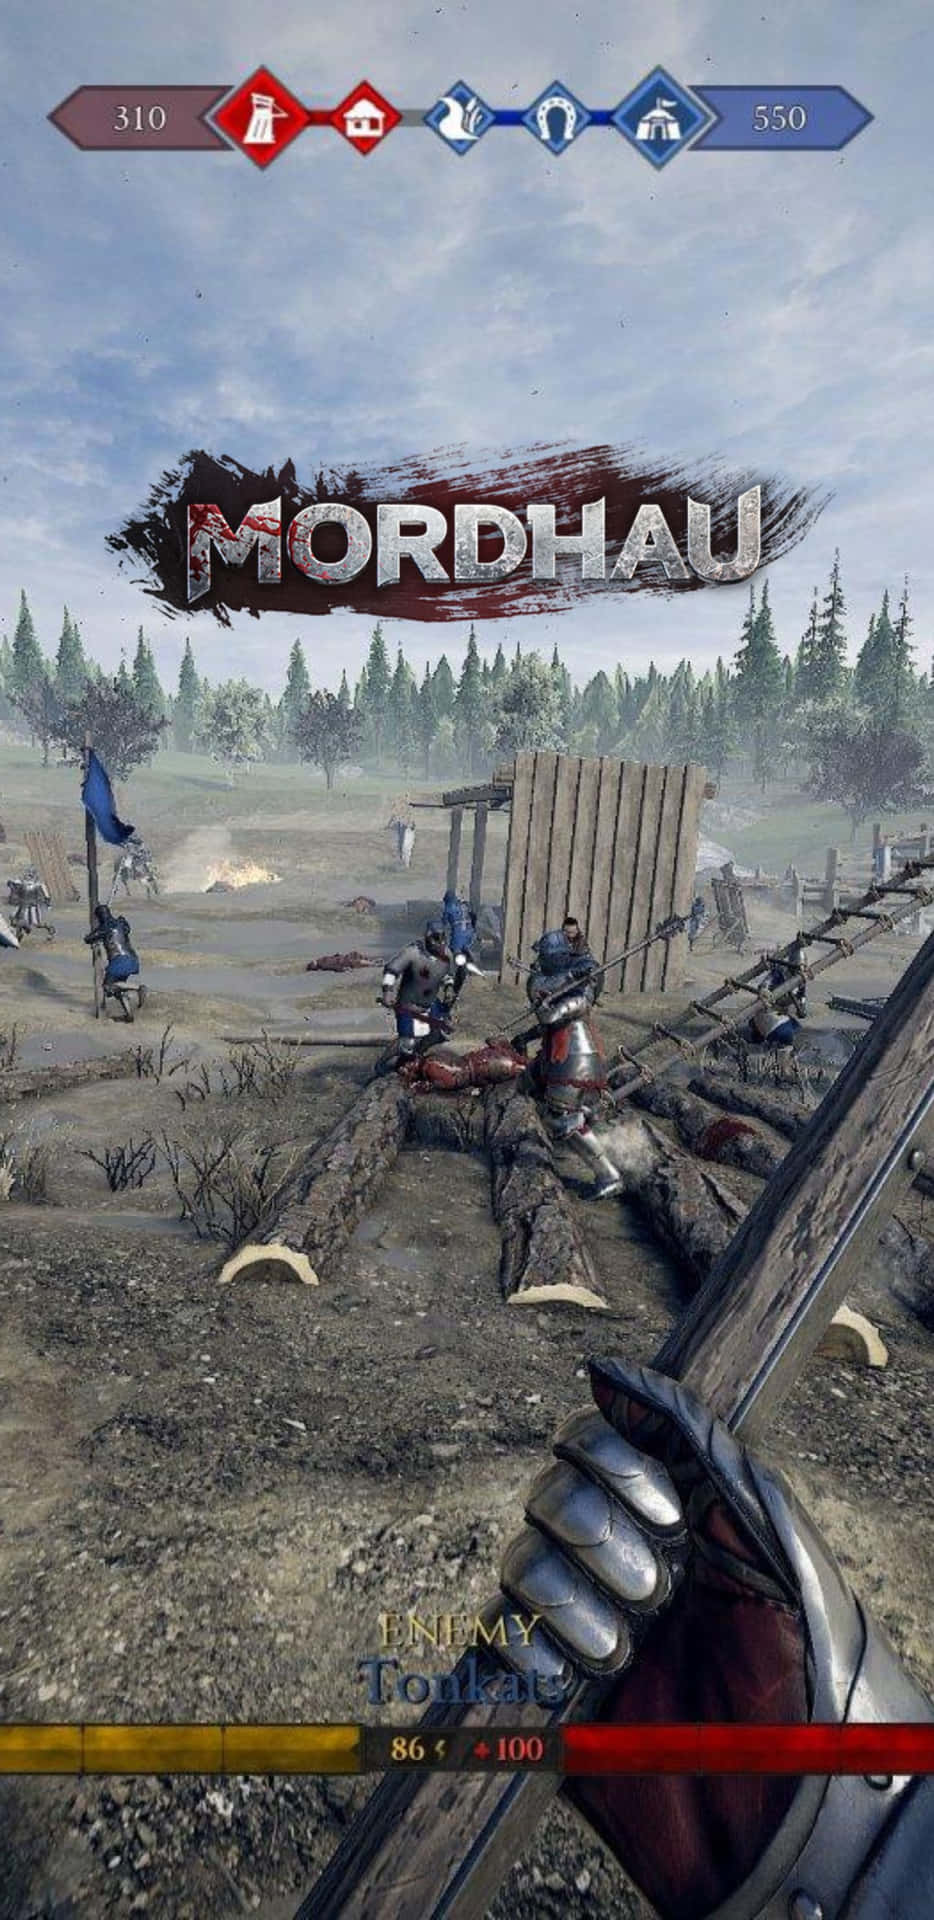 Mordhaul - Screenshots